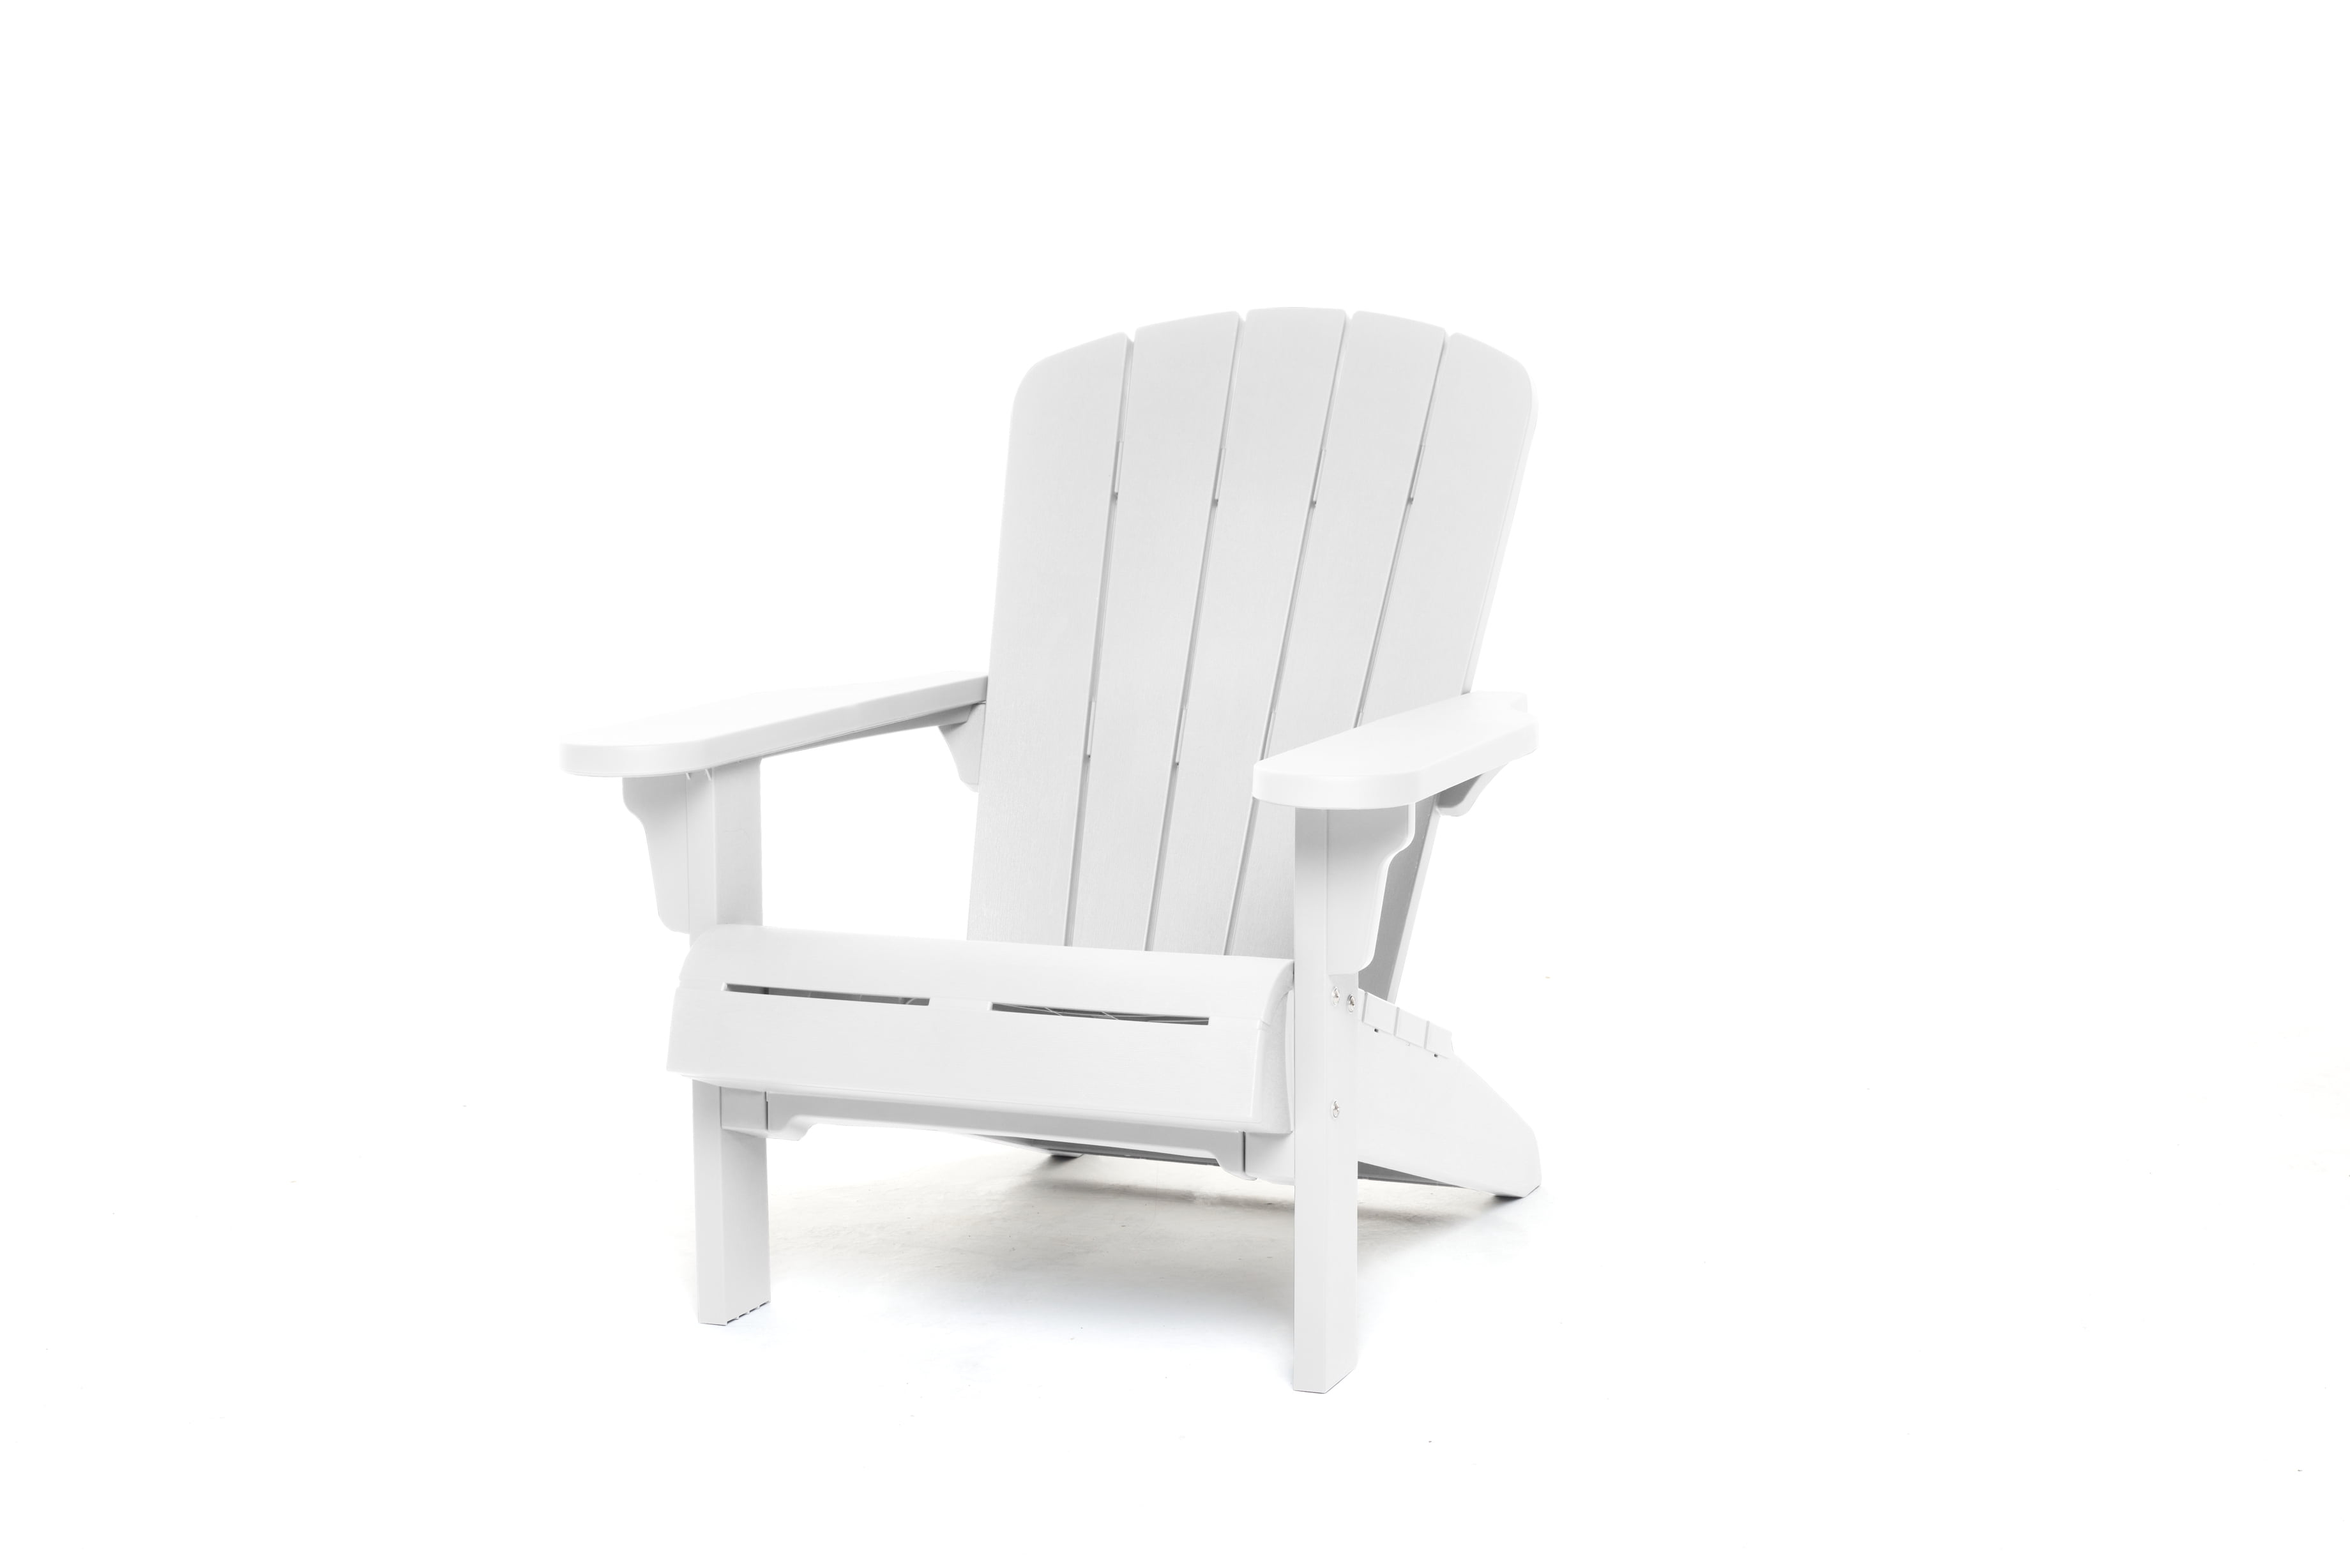 Keter Adirondack Chair Resin Outdoor Furniture White Walmart Com Walmart Com